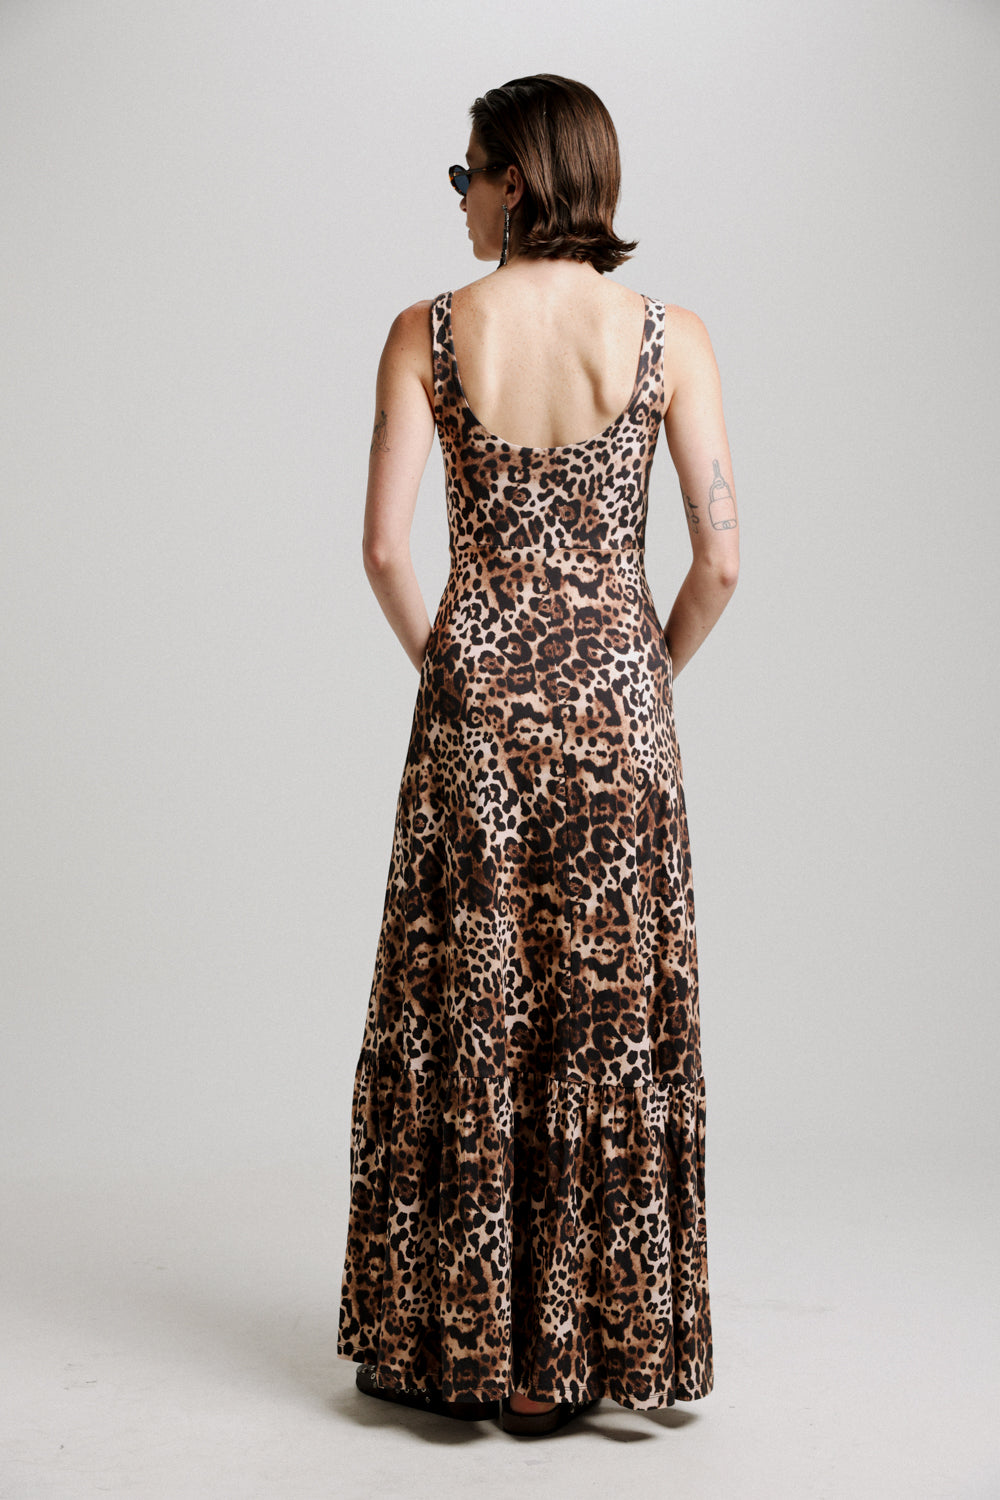 Target Leopard Dress